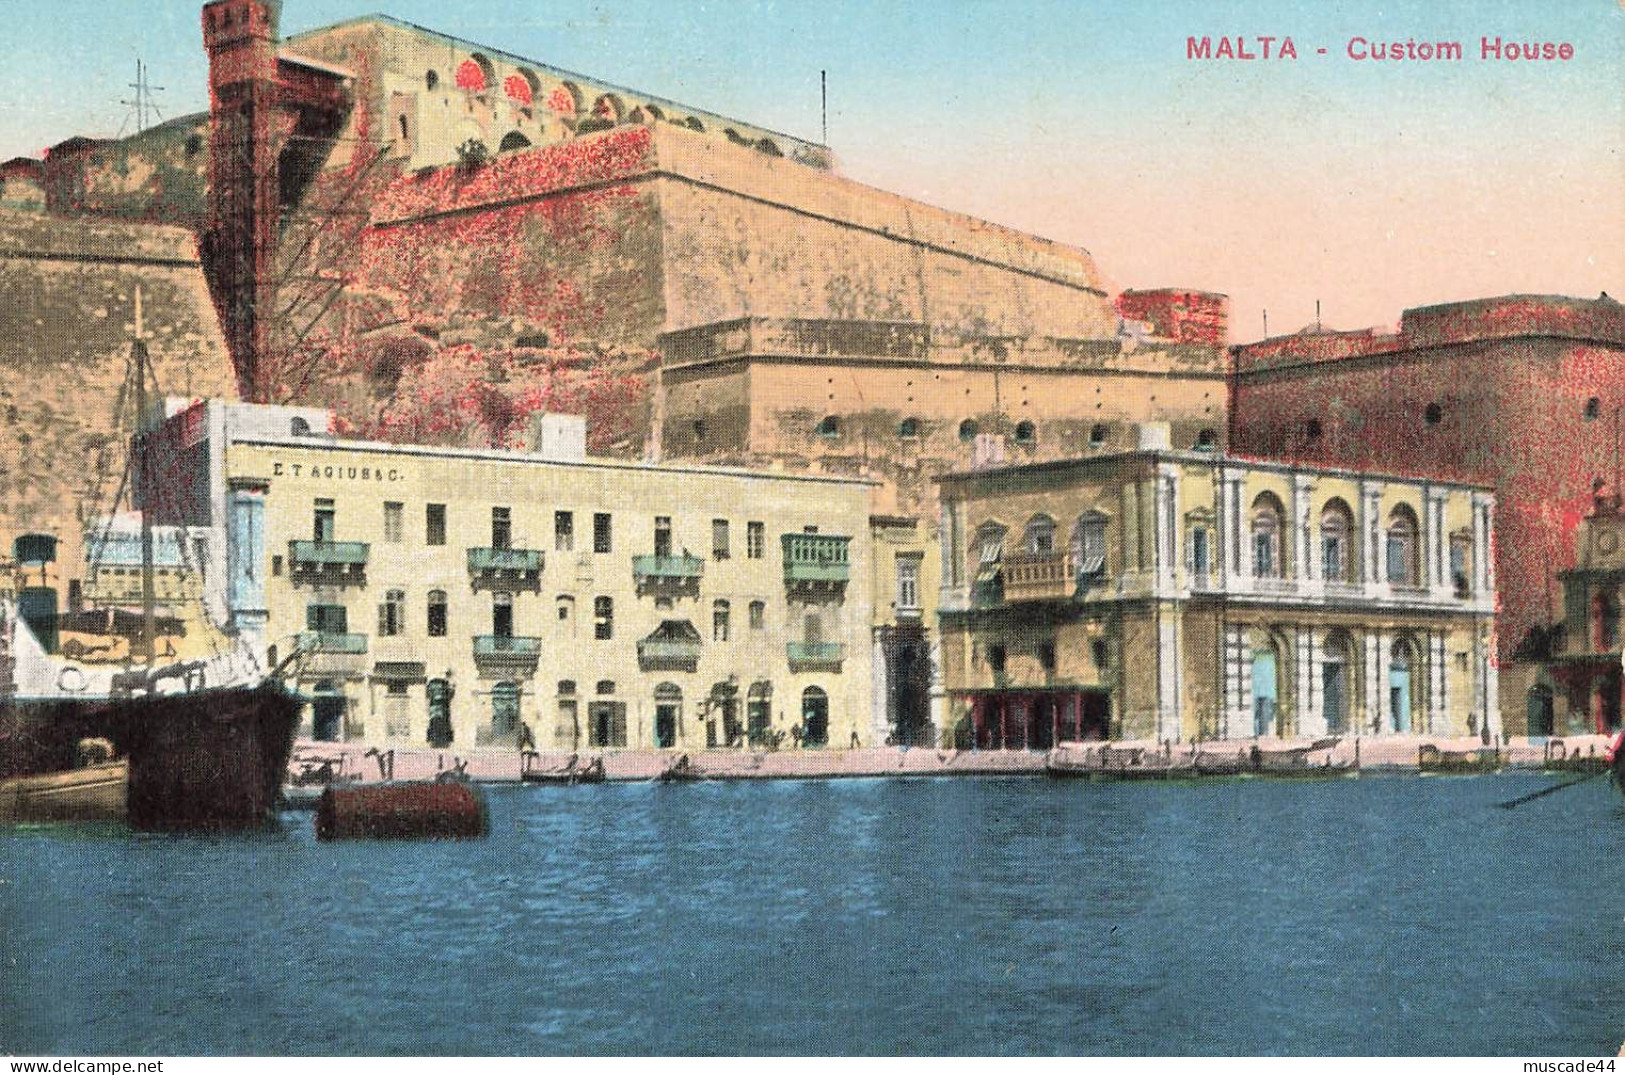 MALTA - CUSTOM HOUSE - Malta